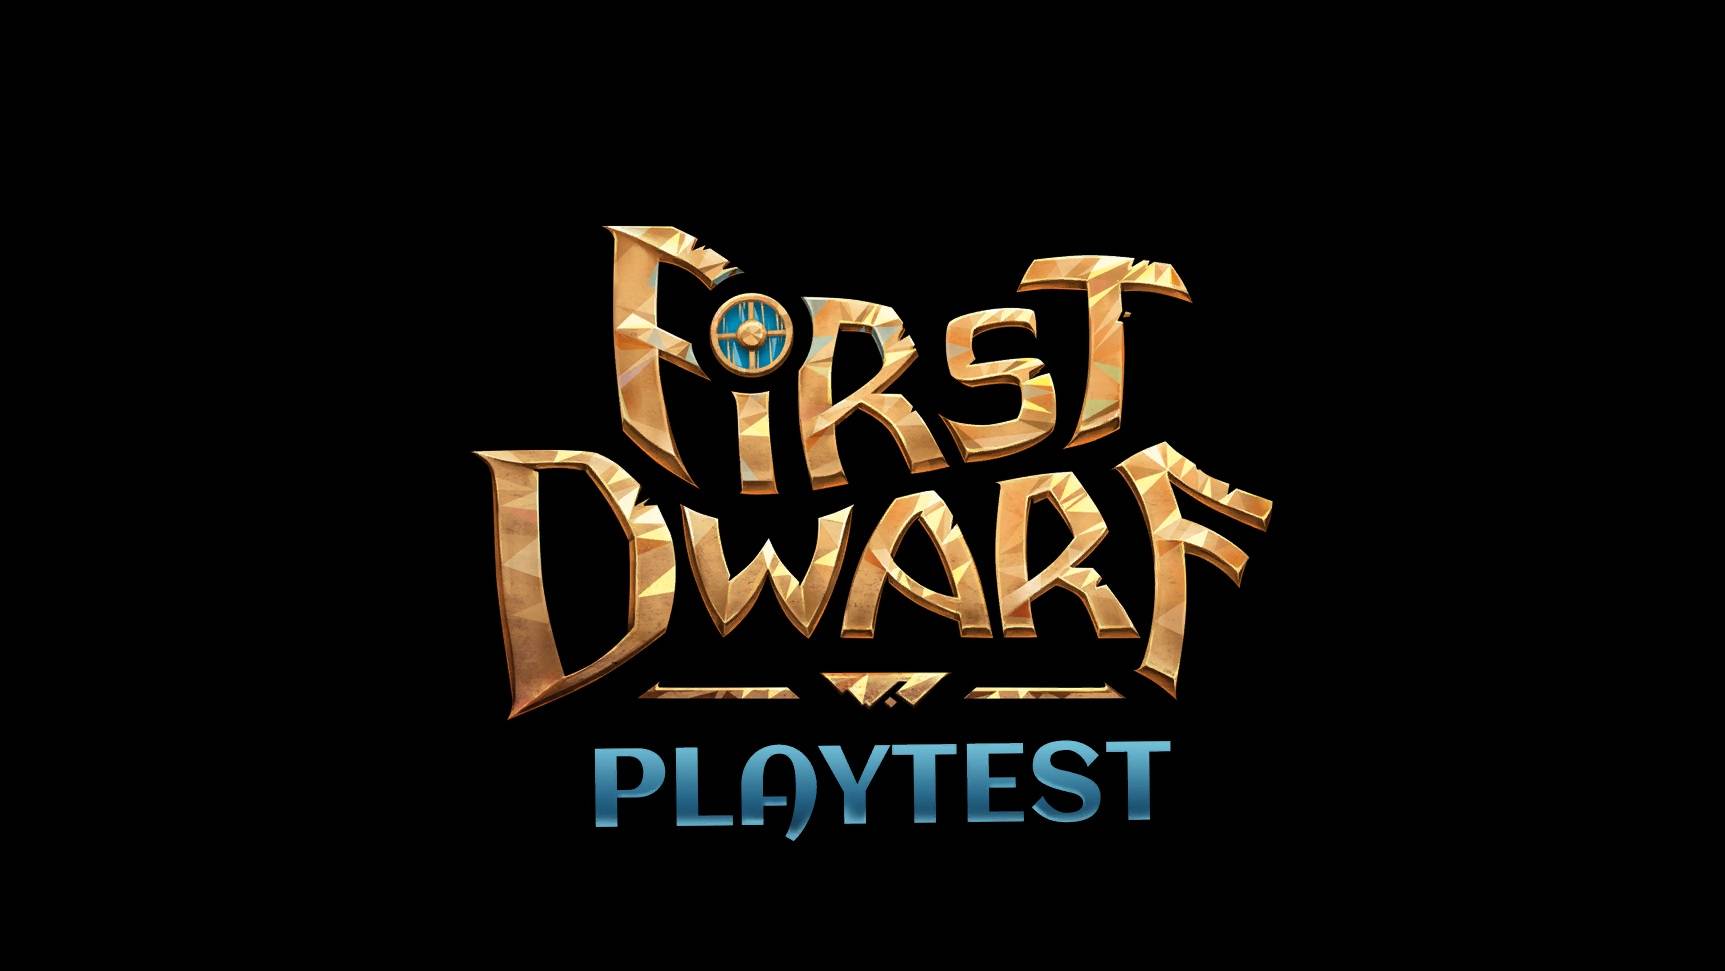 First Dwarf Playtest